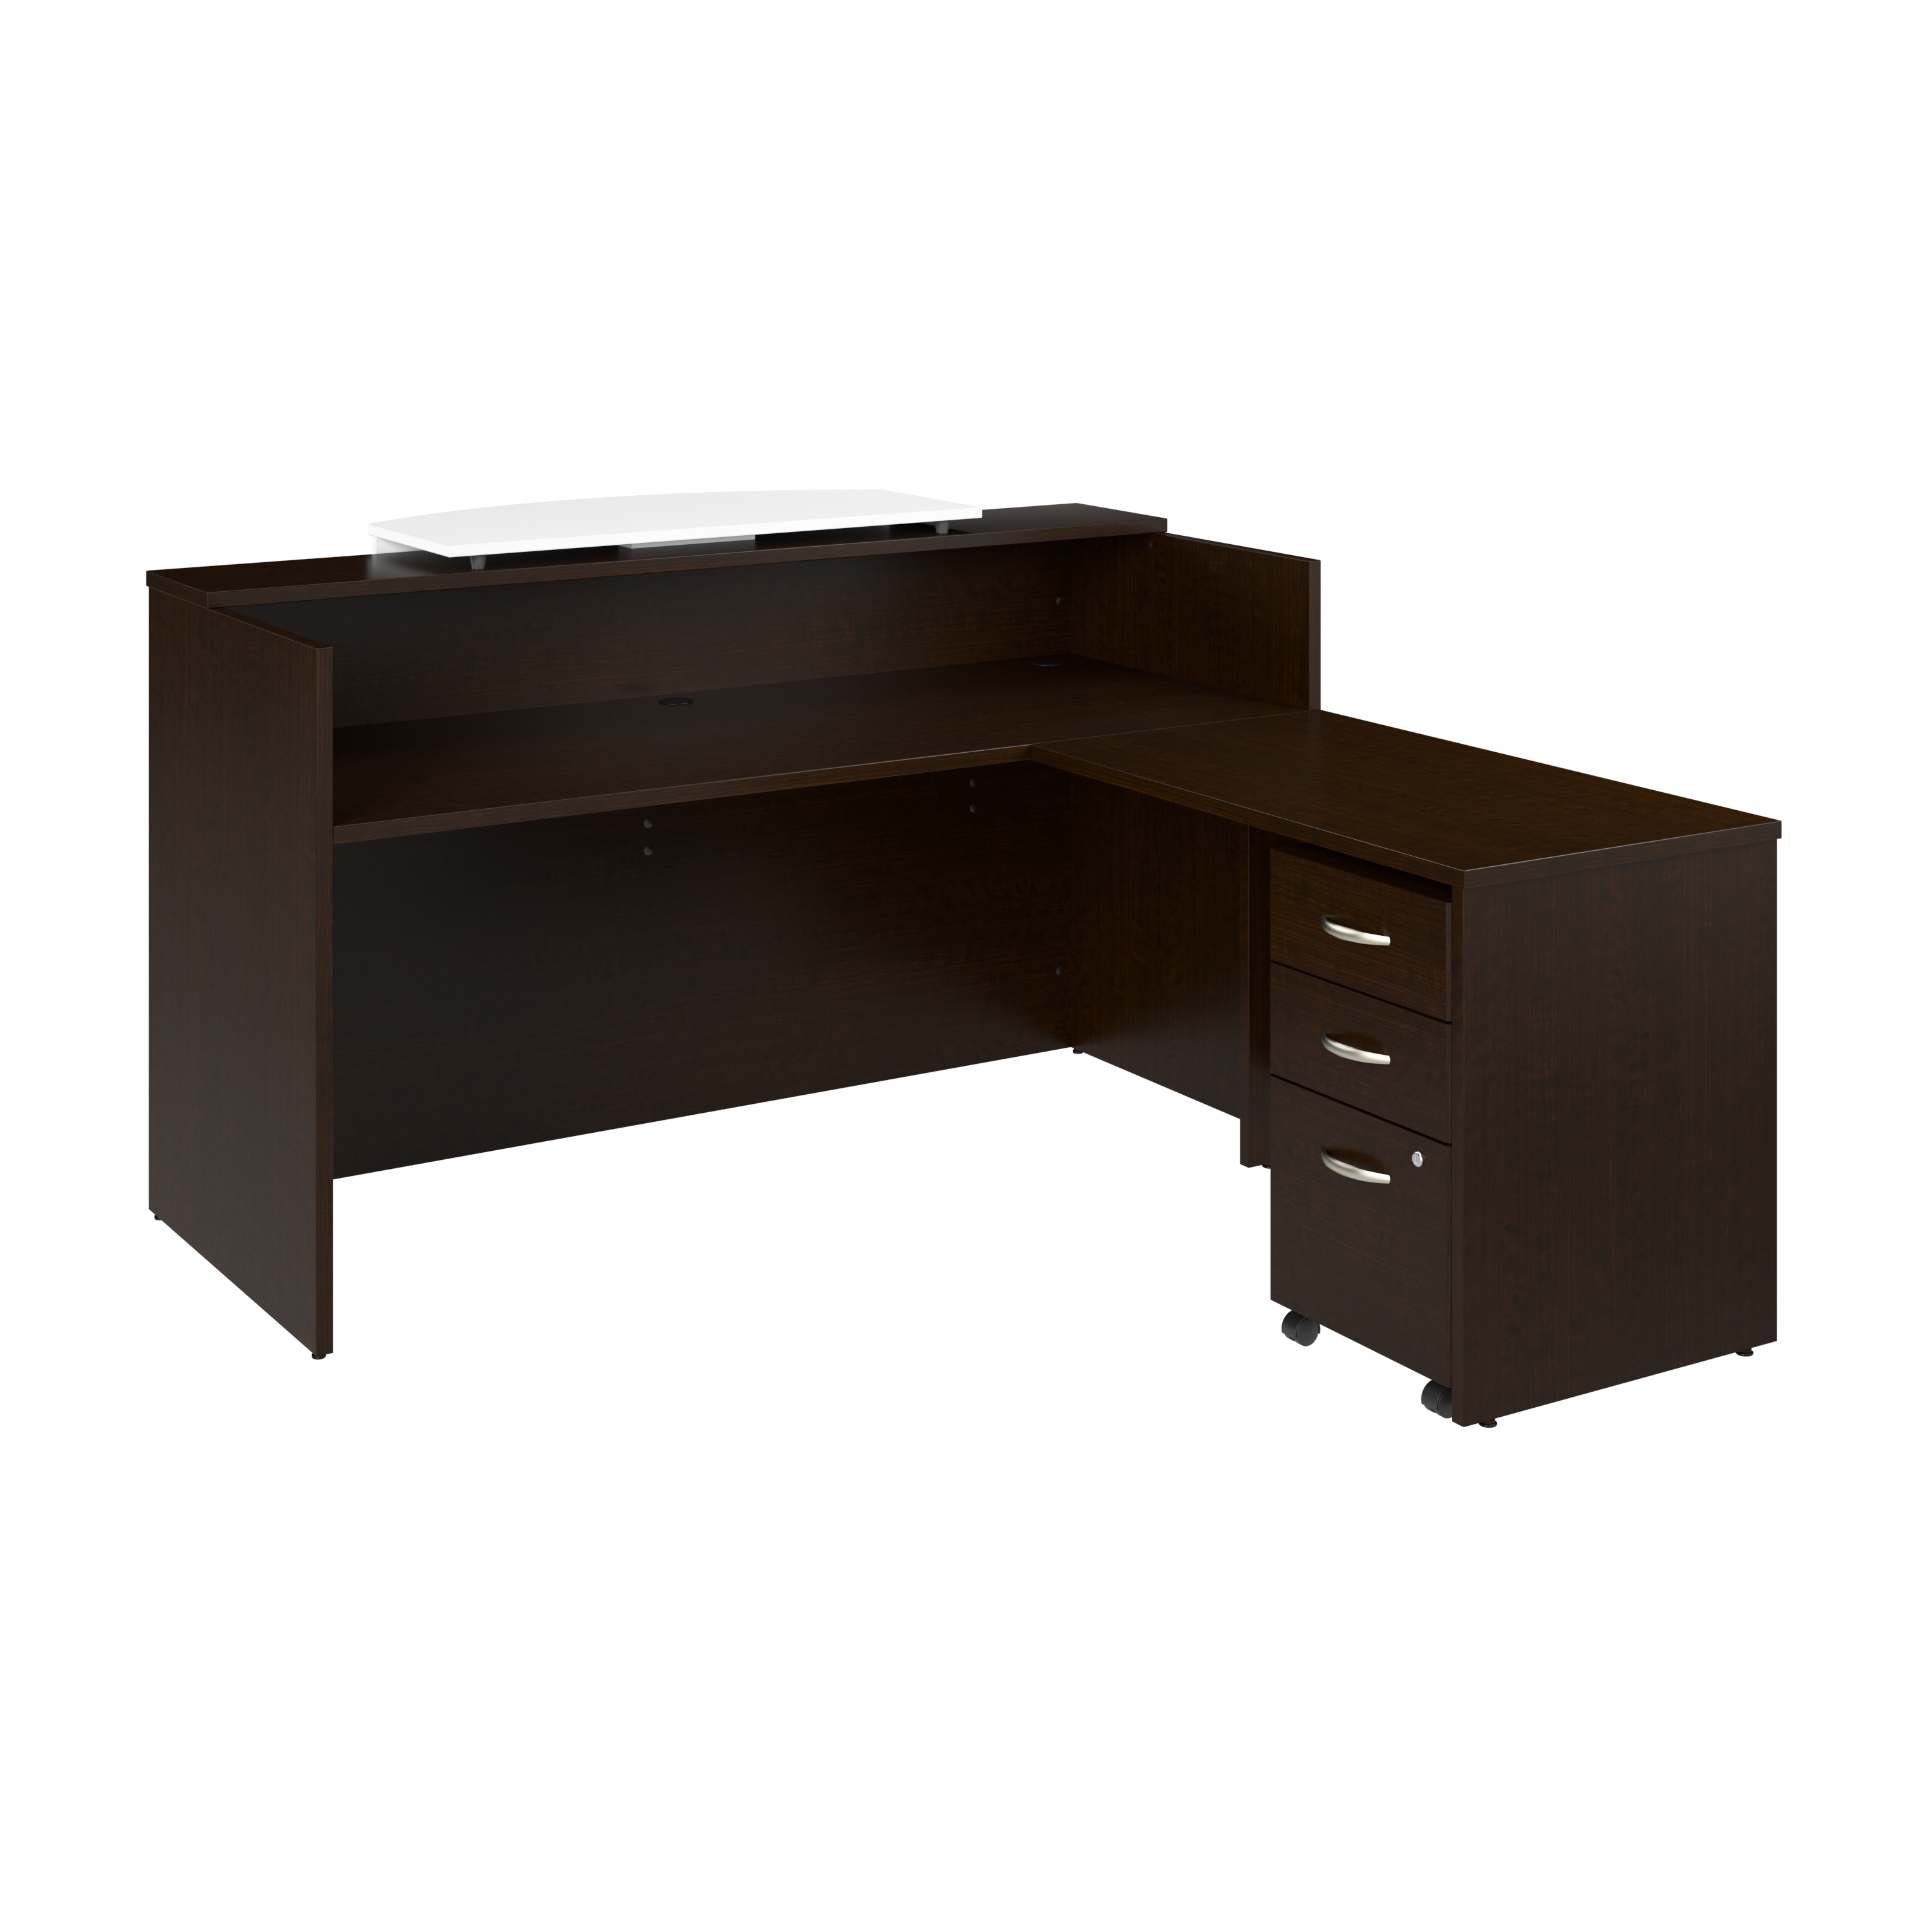 Shop Bush Business Furniture Arrive 72W x 72D L Shaped Reception Desk with Counter and Mobile File Cabinet 02 ARV010MR #color_mocha cherry